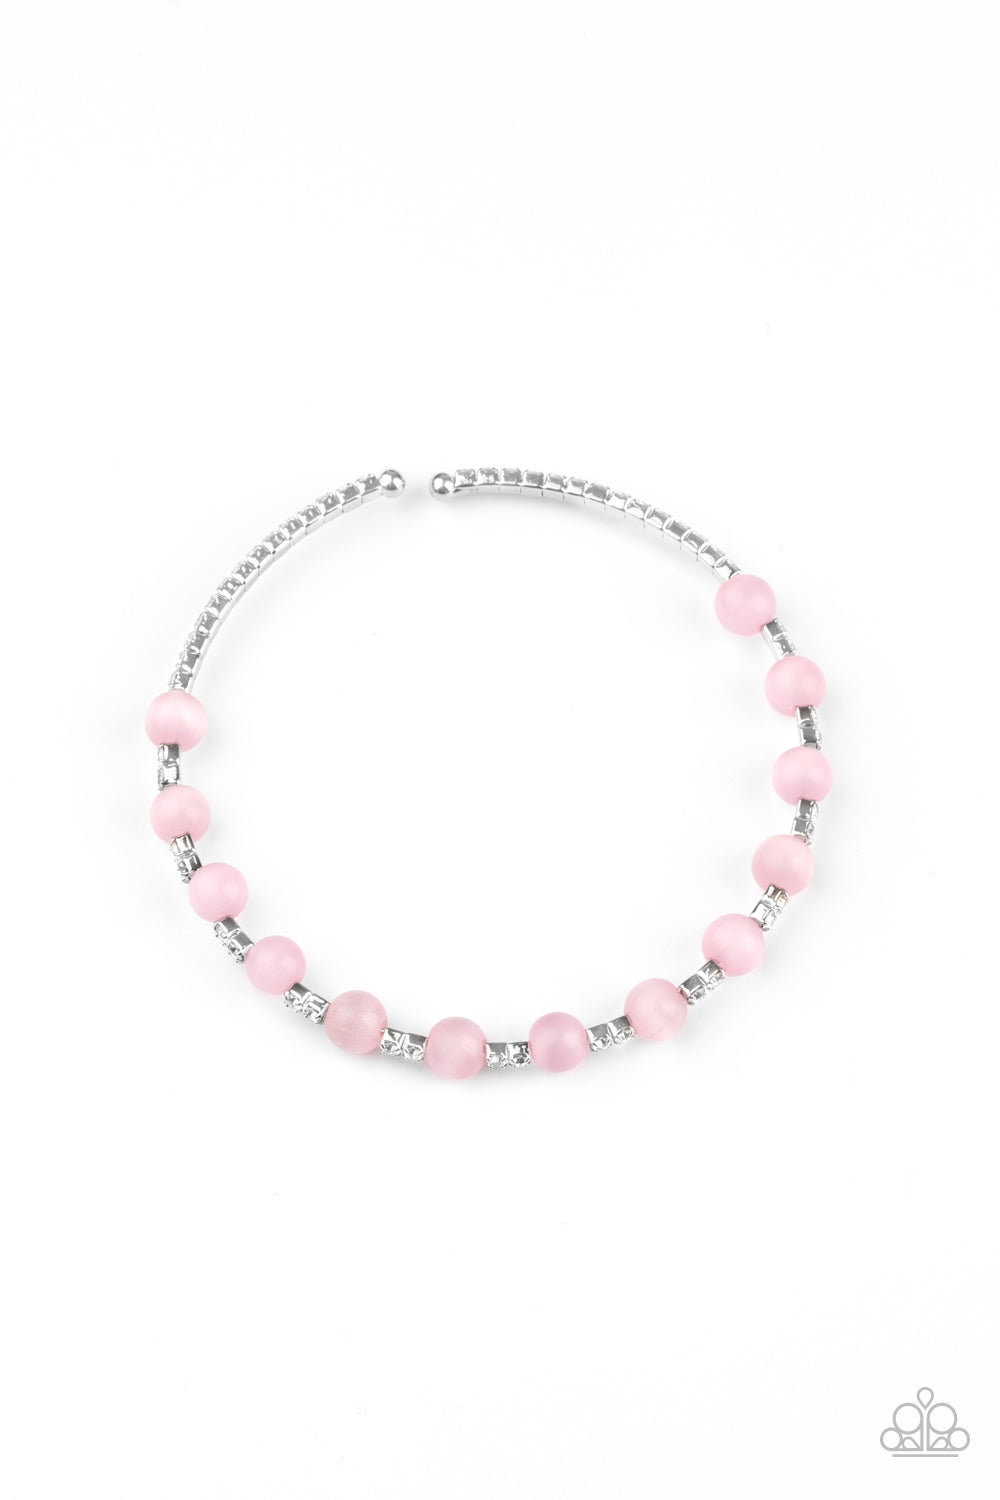 Tea Party Twinkle Bracelet (Pink, White)